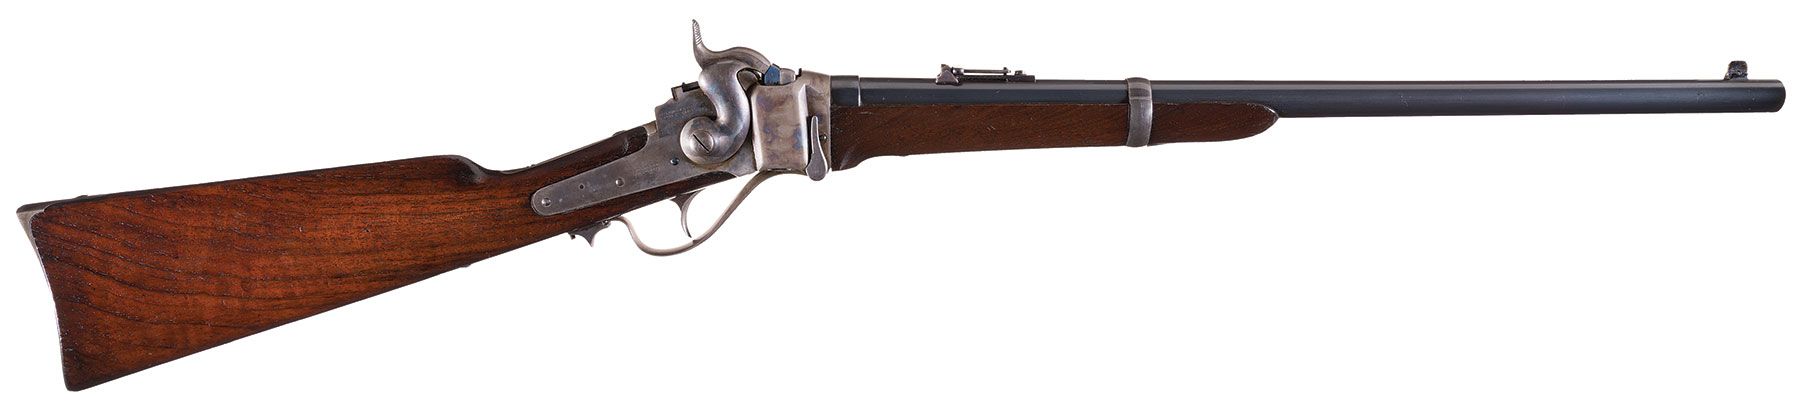 1859 sharps rifle serial numbers